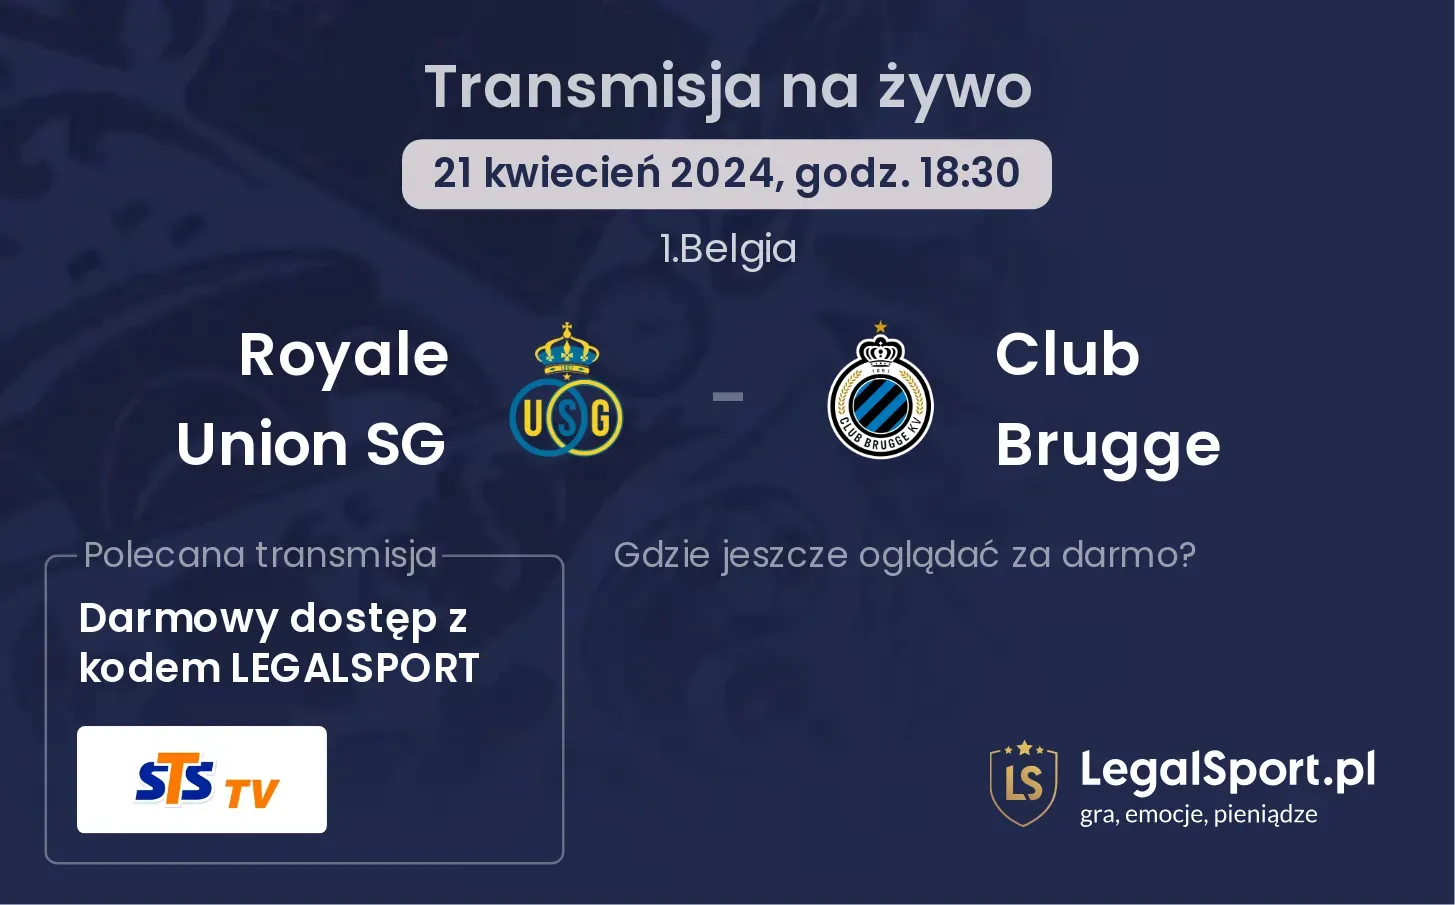 Royale Union SG - Club Brugge transmisja na żywo